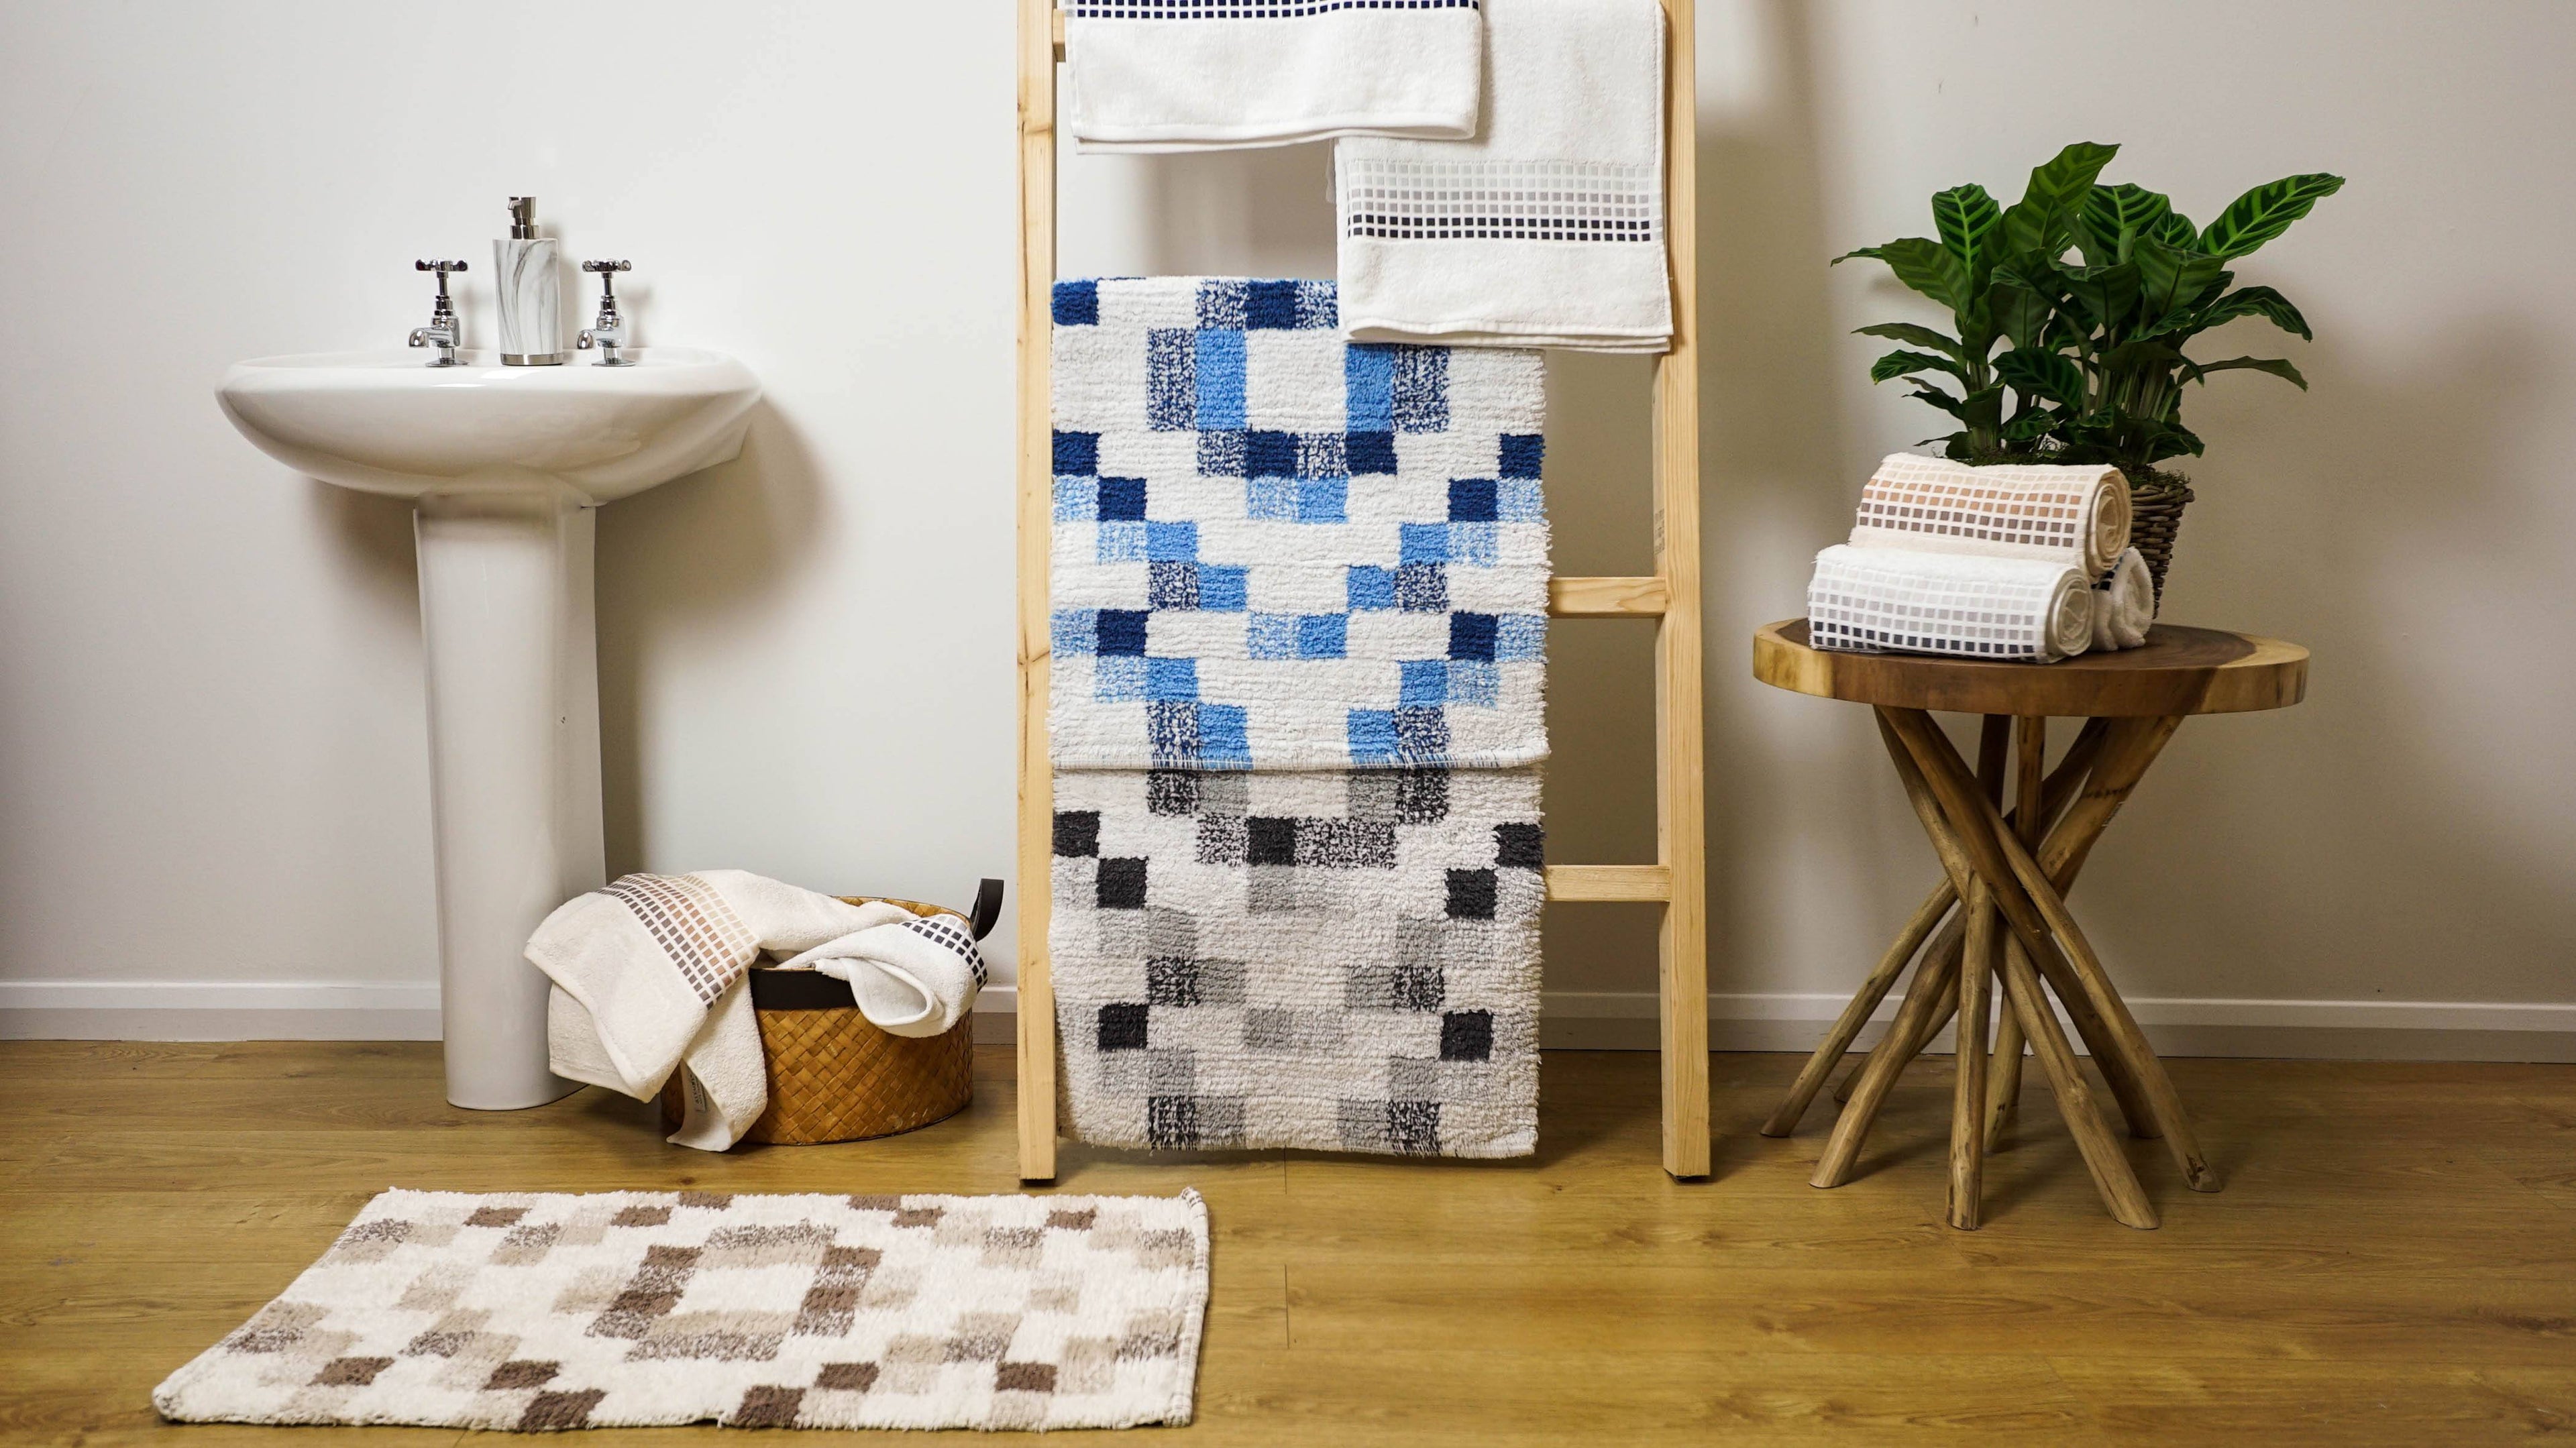 mosaic tile bath mats in blue, grey and natural